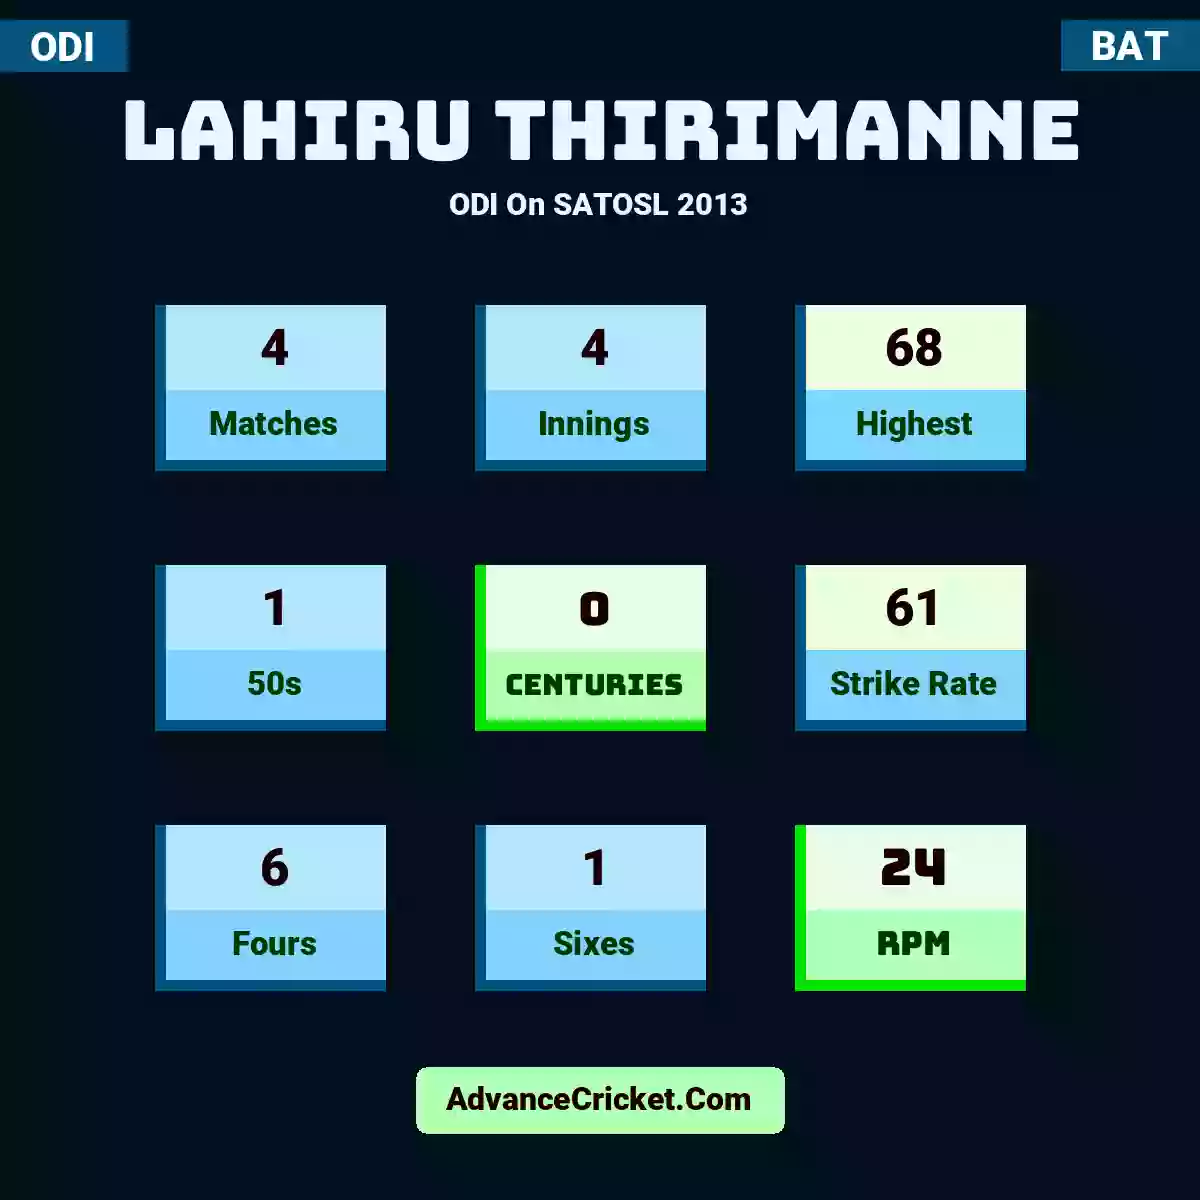 Lahiru Thirimanne ODI  On SATOSL 2013, Lahiru Thirimanne played 4 matches, scored 68 runs as highest, 1 half-centuries, and 0 centuries, with a strike rate of 61. L.Thirimanne hit 6 fours and 1 sixes, with an RPM of 24.